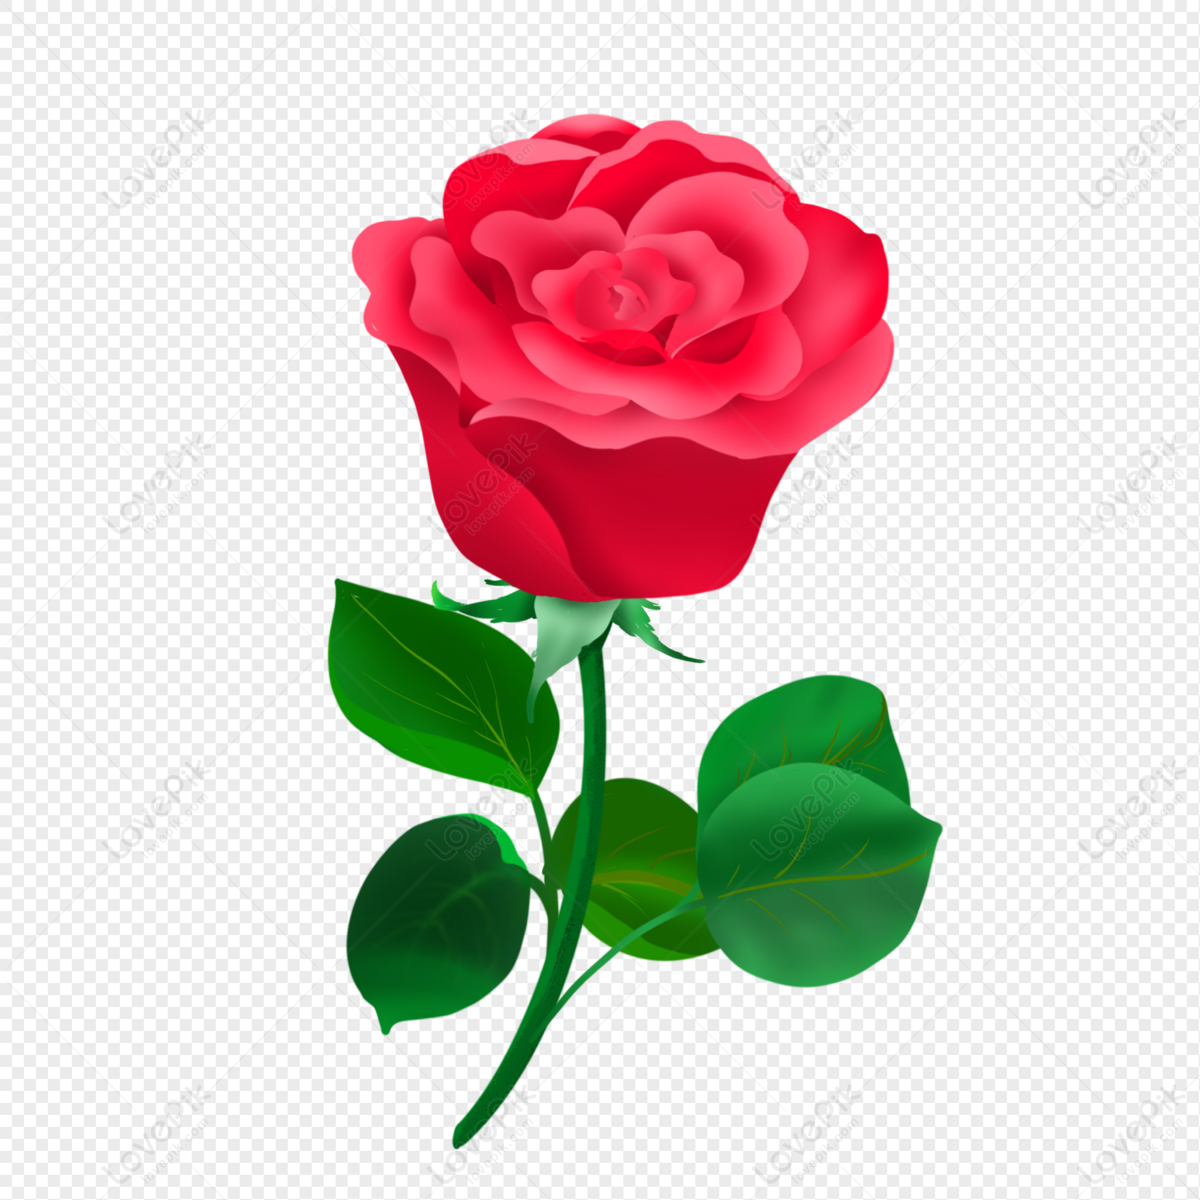 Hermosas Rosas Seductoras PNG Imágenes Gratis - Lovepik